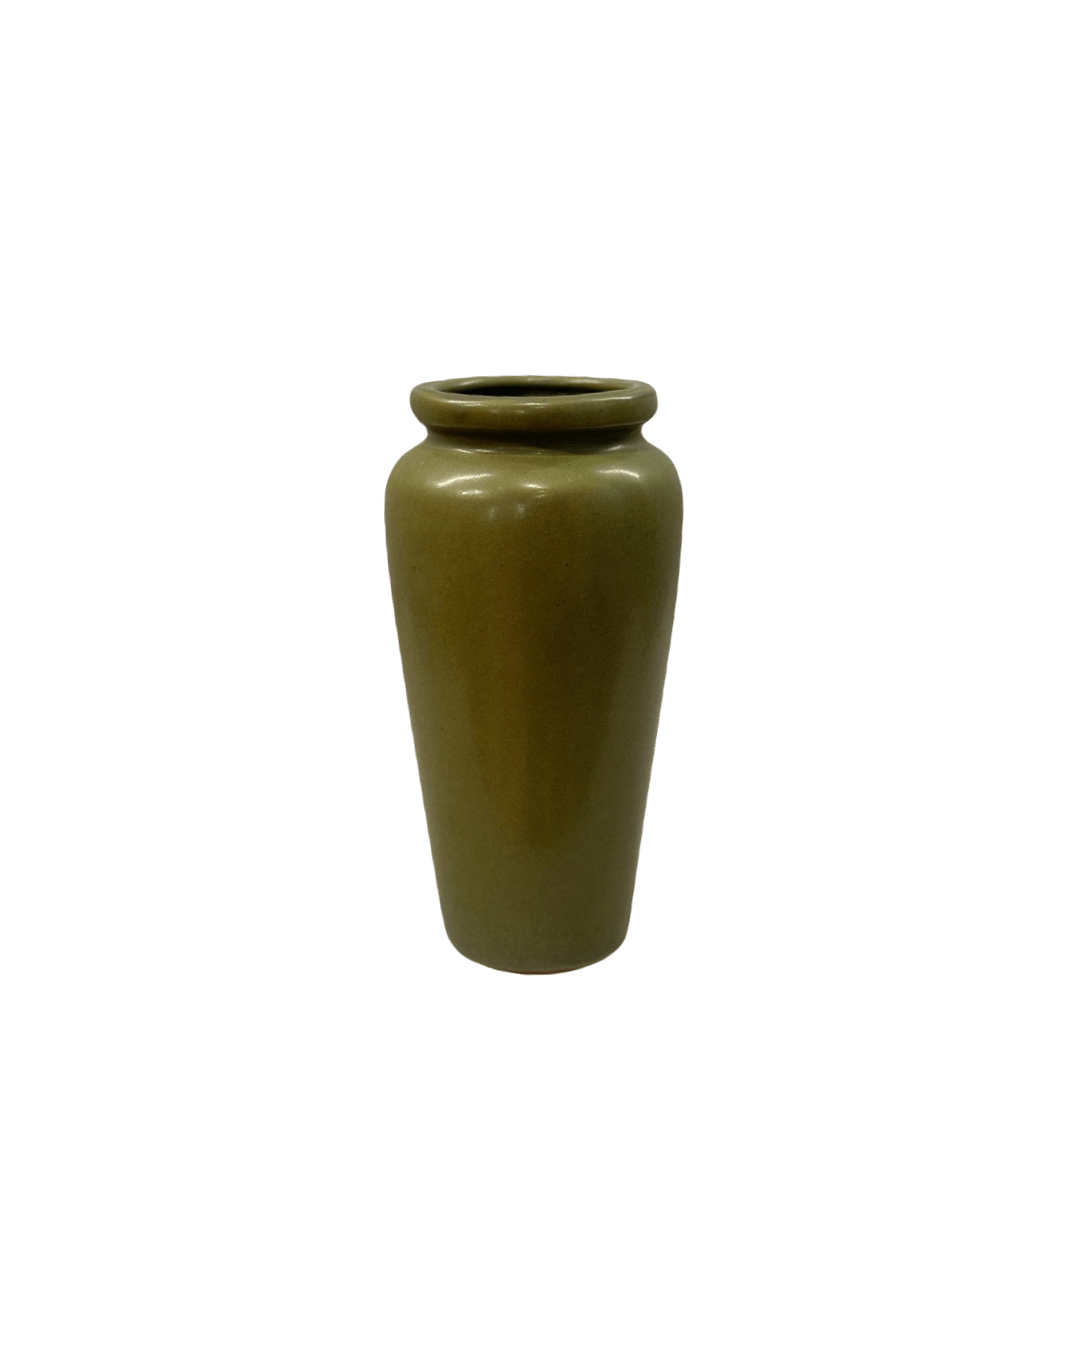 Case Study Objects Moss Green Ceramic Vase La Bomba Floristry Vancouver Canada